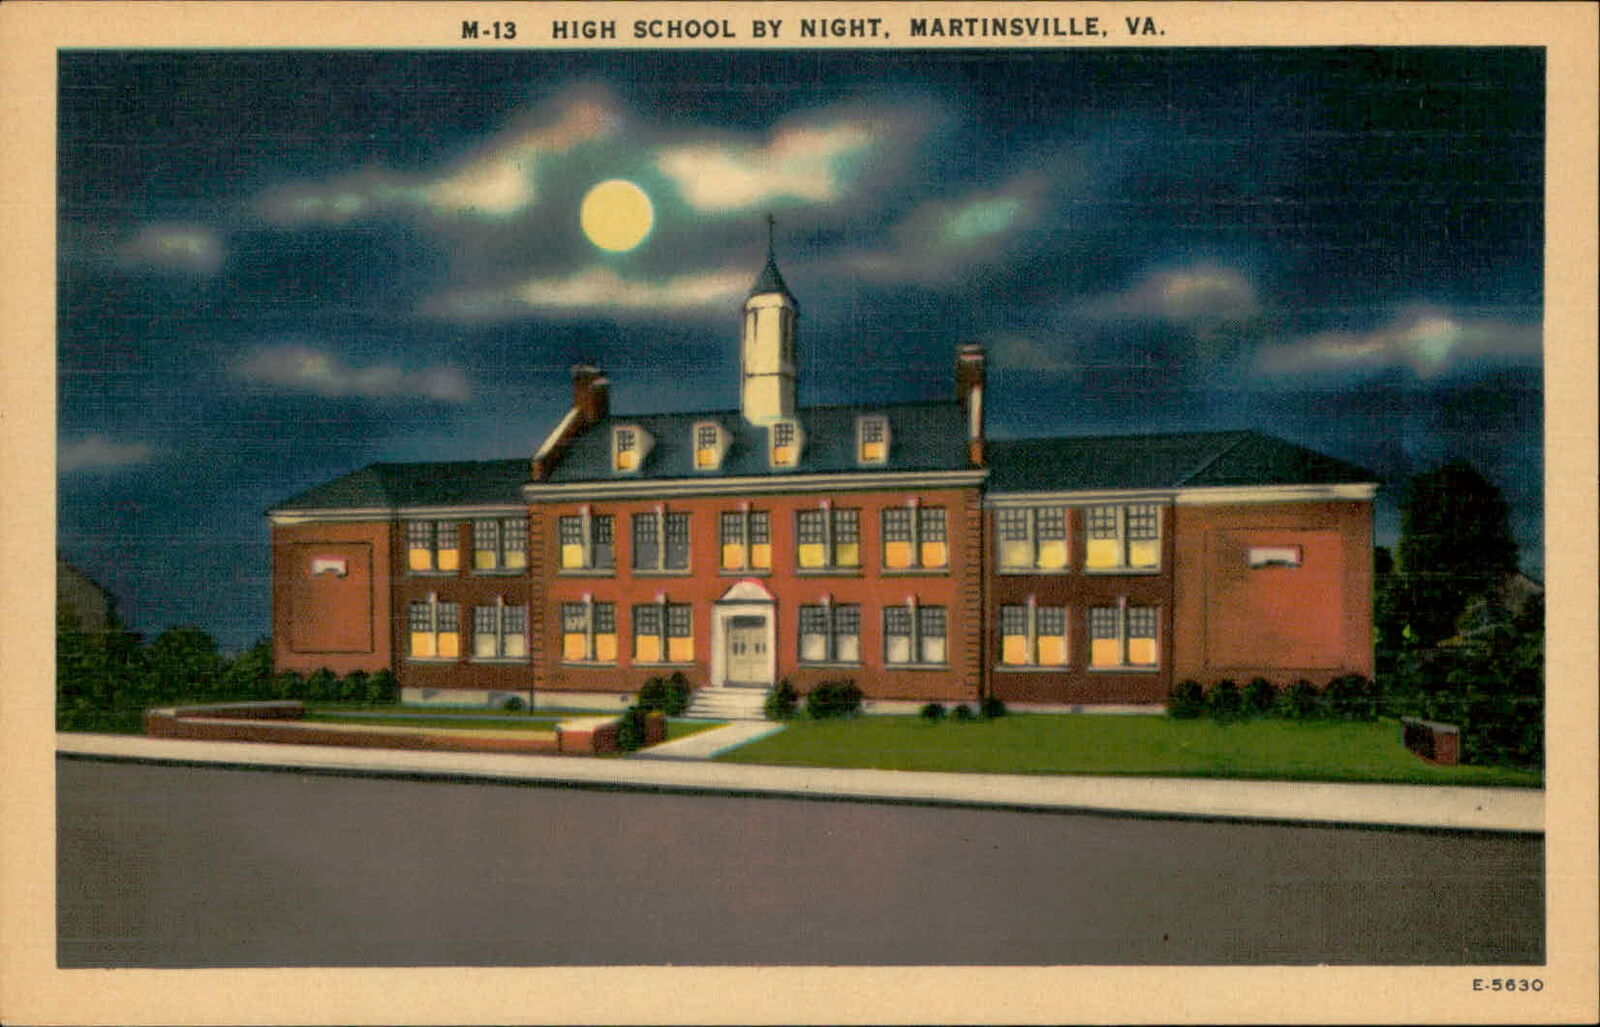 Postcard: M-13 HIGH SCHOOL BY NIGHT, MARTINSVILLE, VA. E-5630